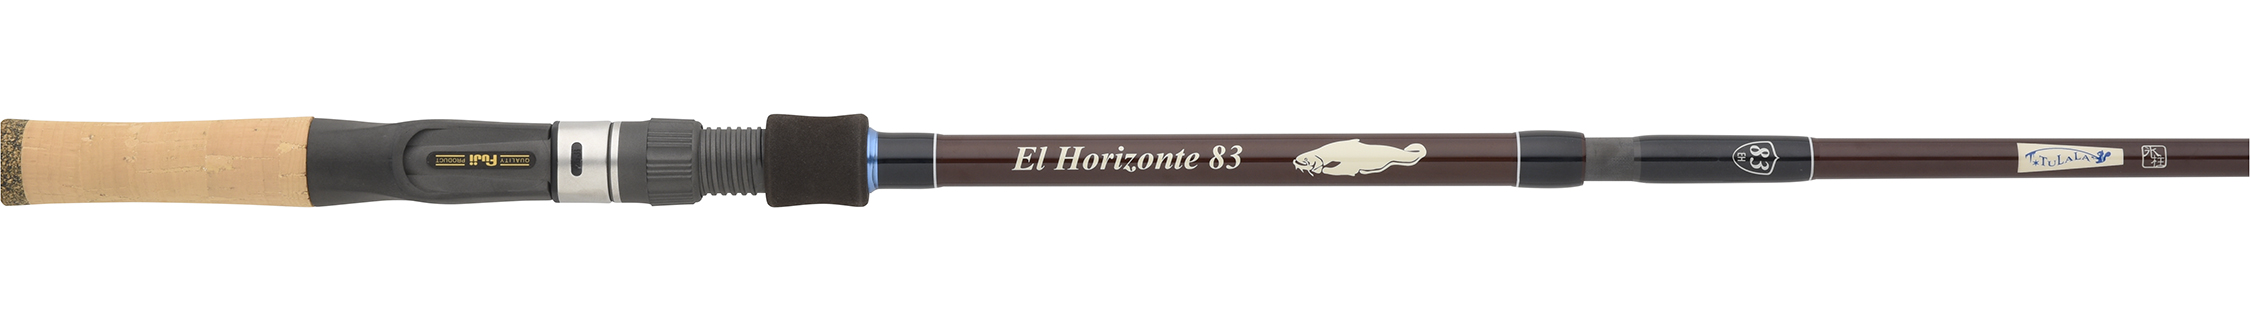 El Horizonte 83 | ロゴ